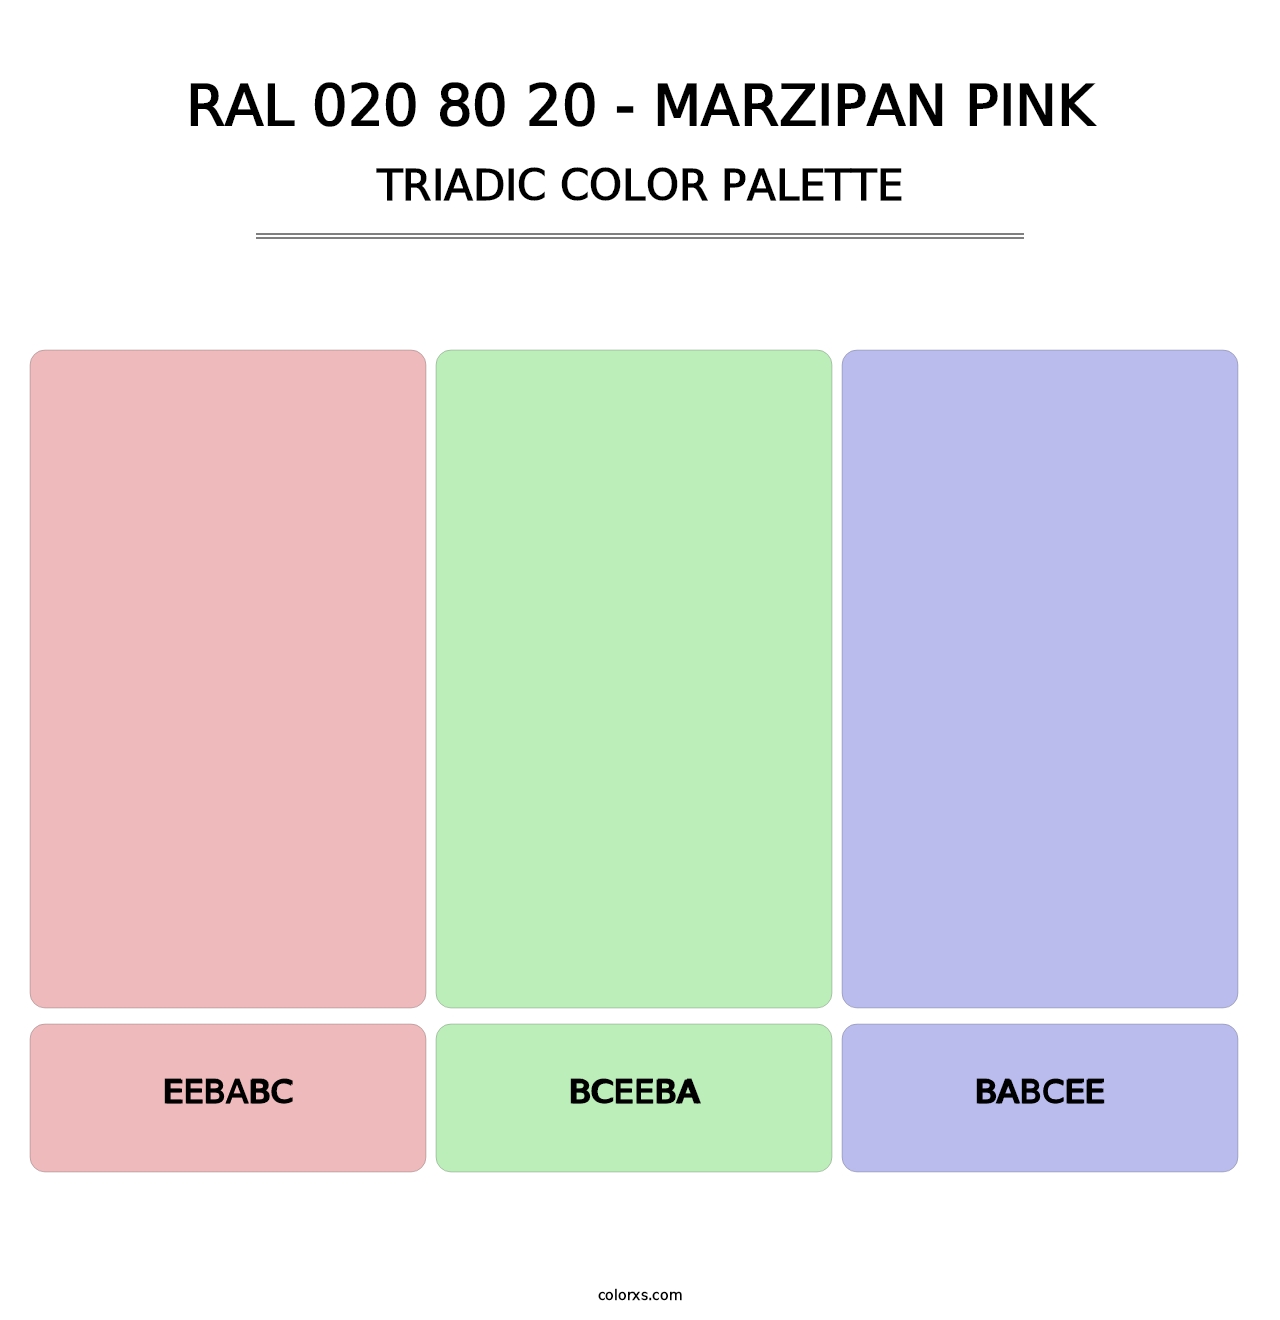 RAL 020 80 20 - Marzipan Pink - Triadic Color Palette